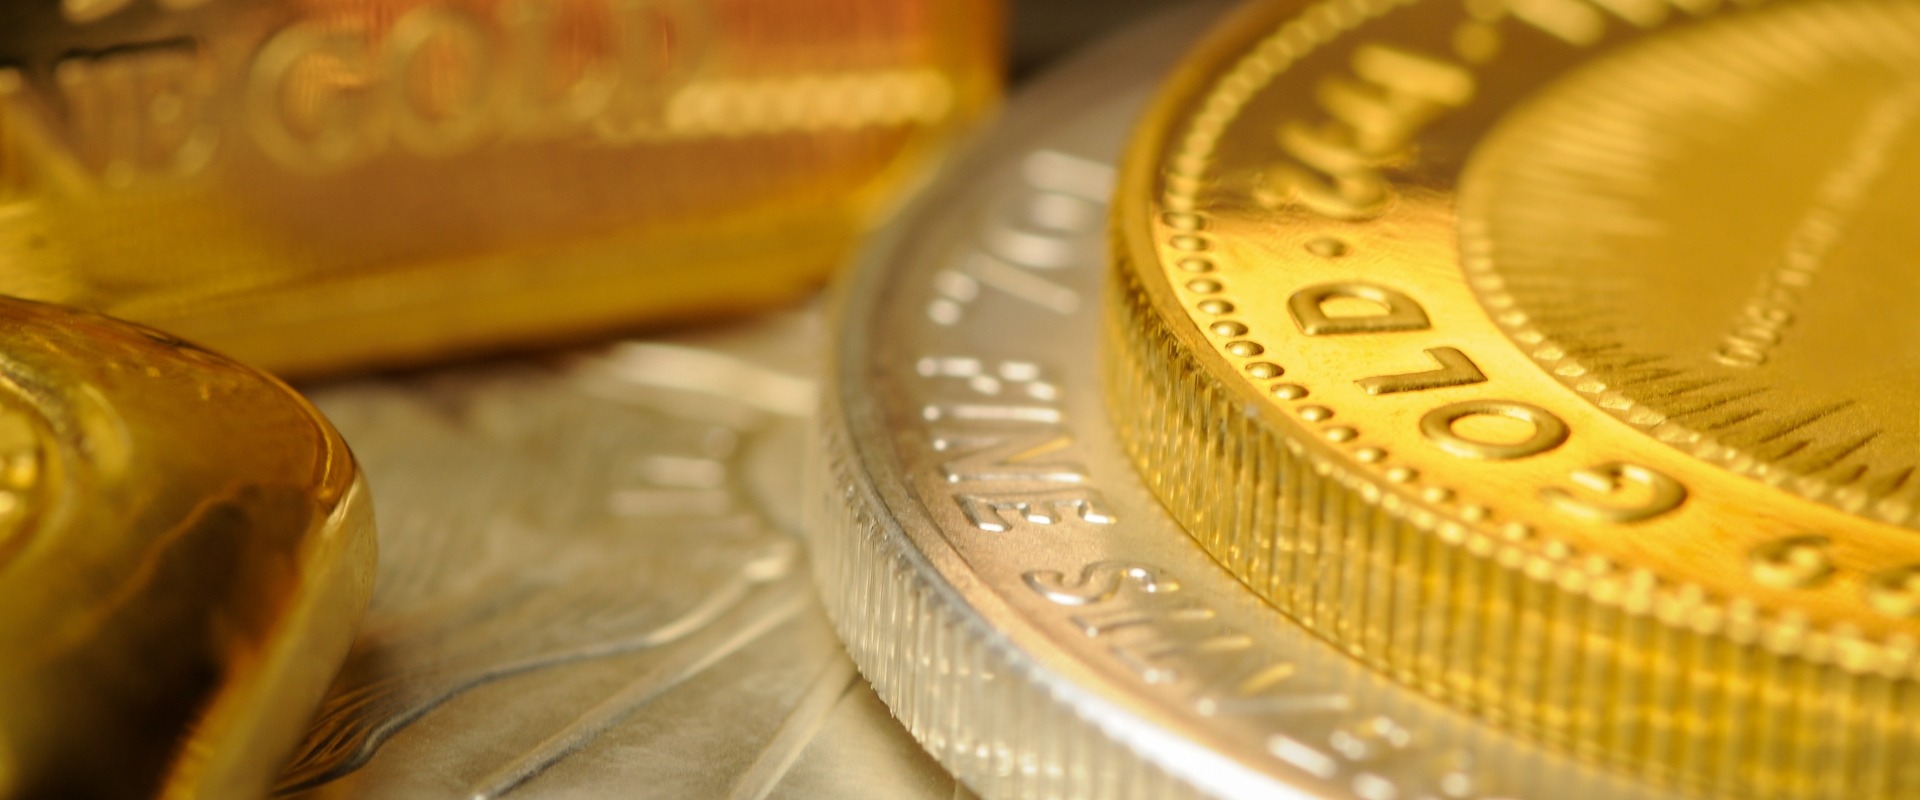 gold bullions and silver bullions